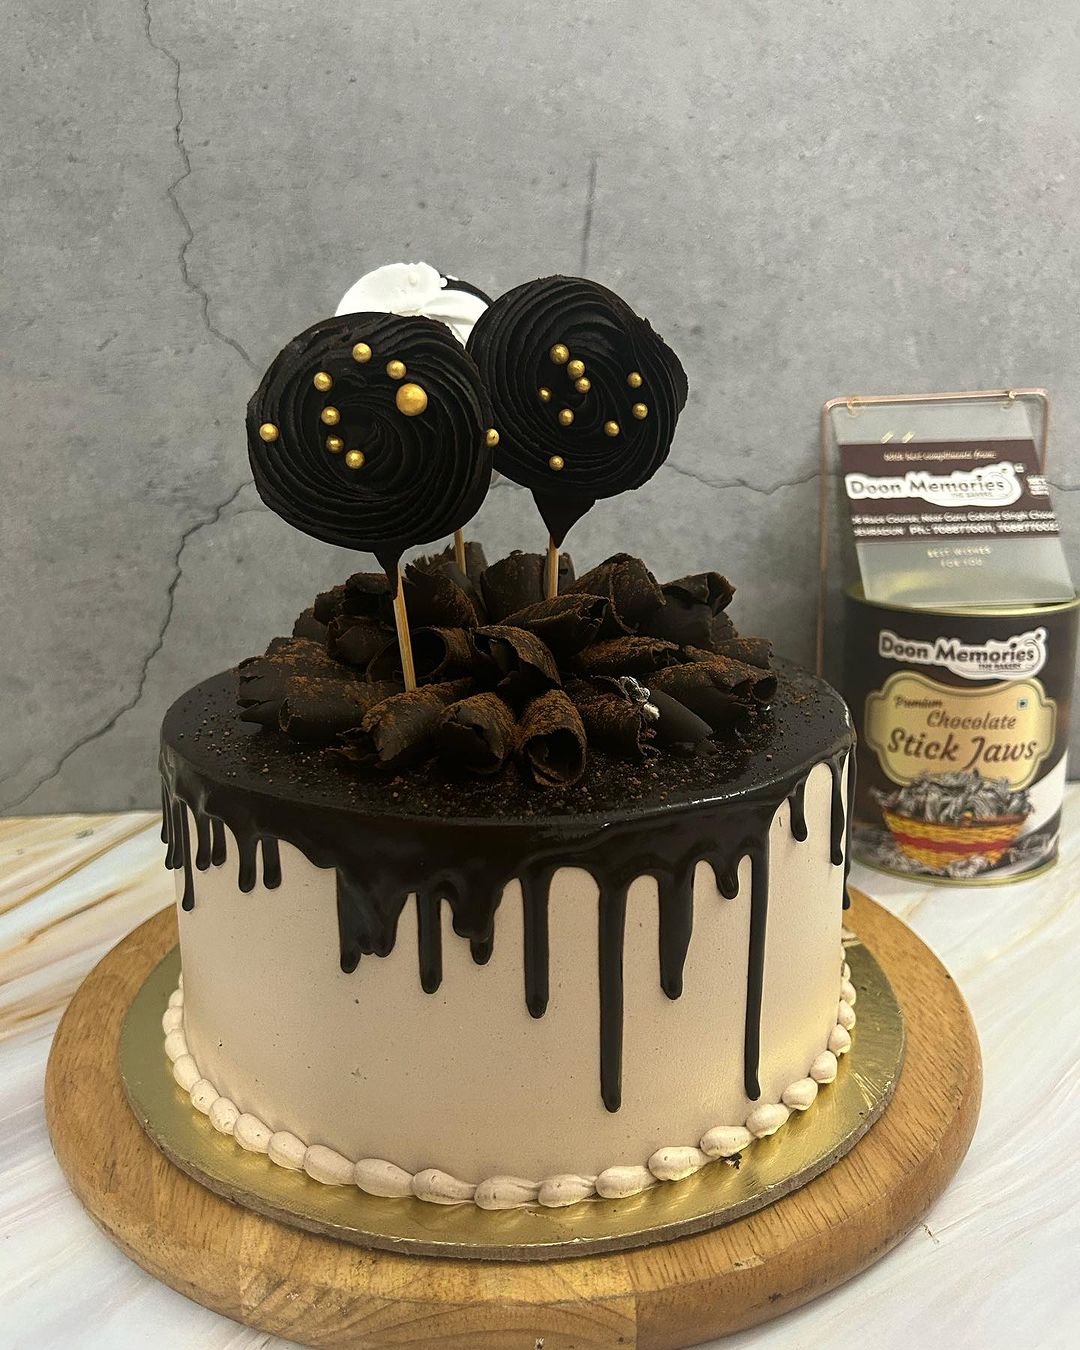 Chocolate Cream Cake with  popups